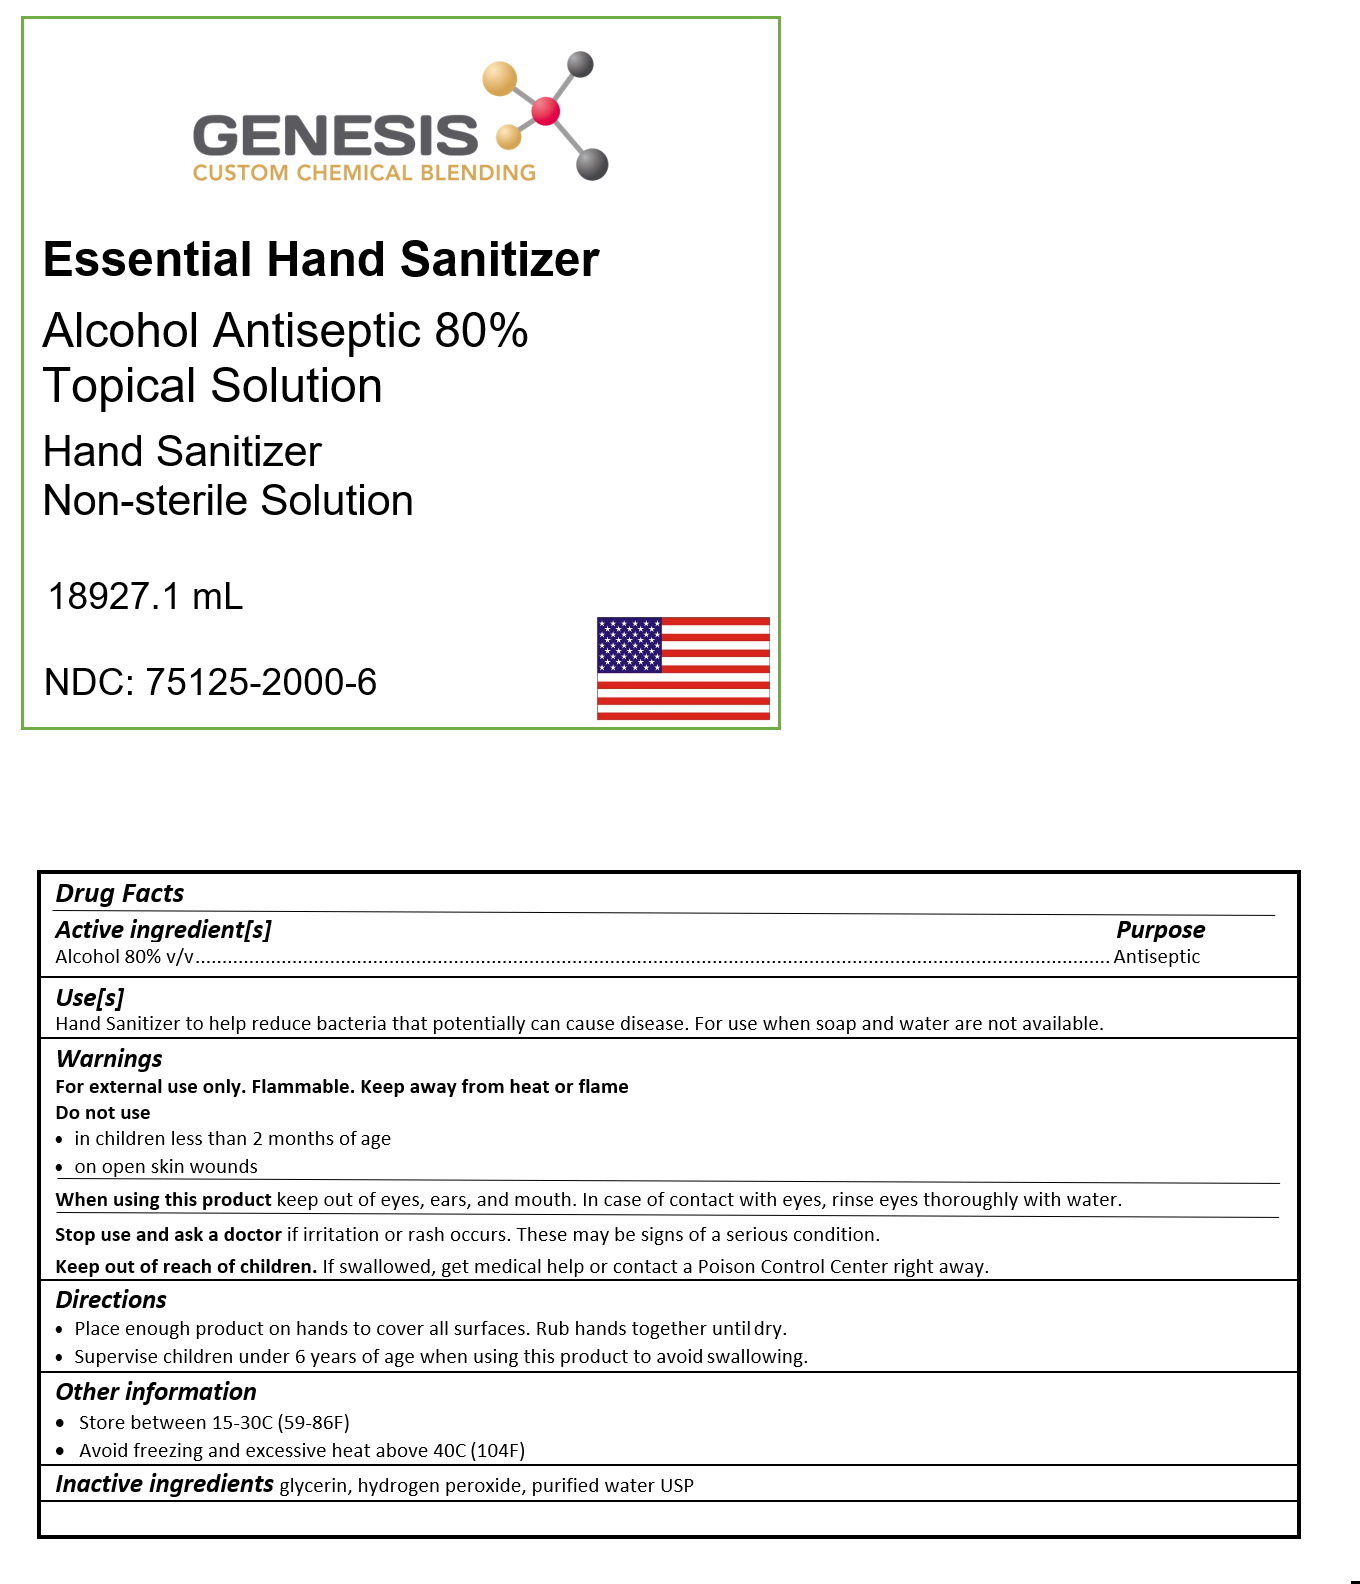 Ethanol80-handsan-consumer-75125-2000-6